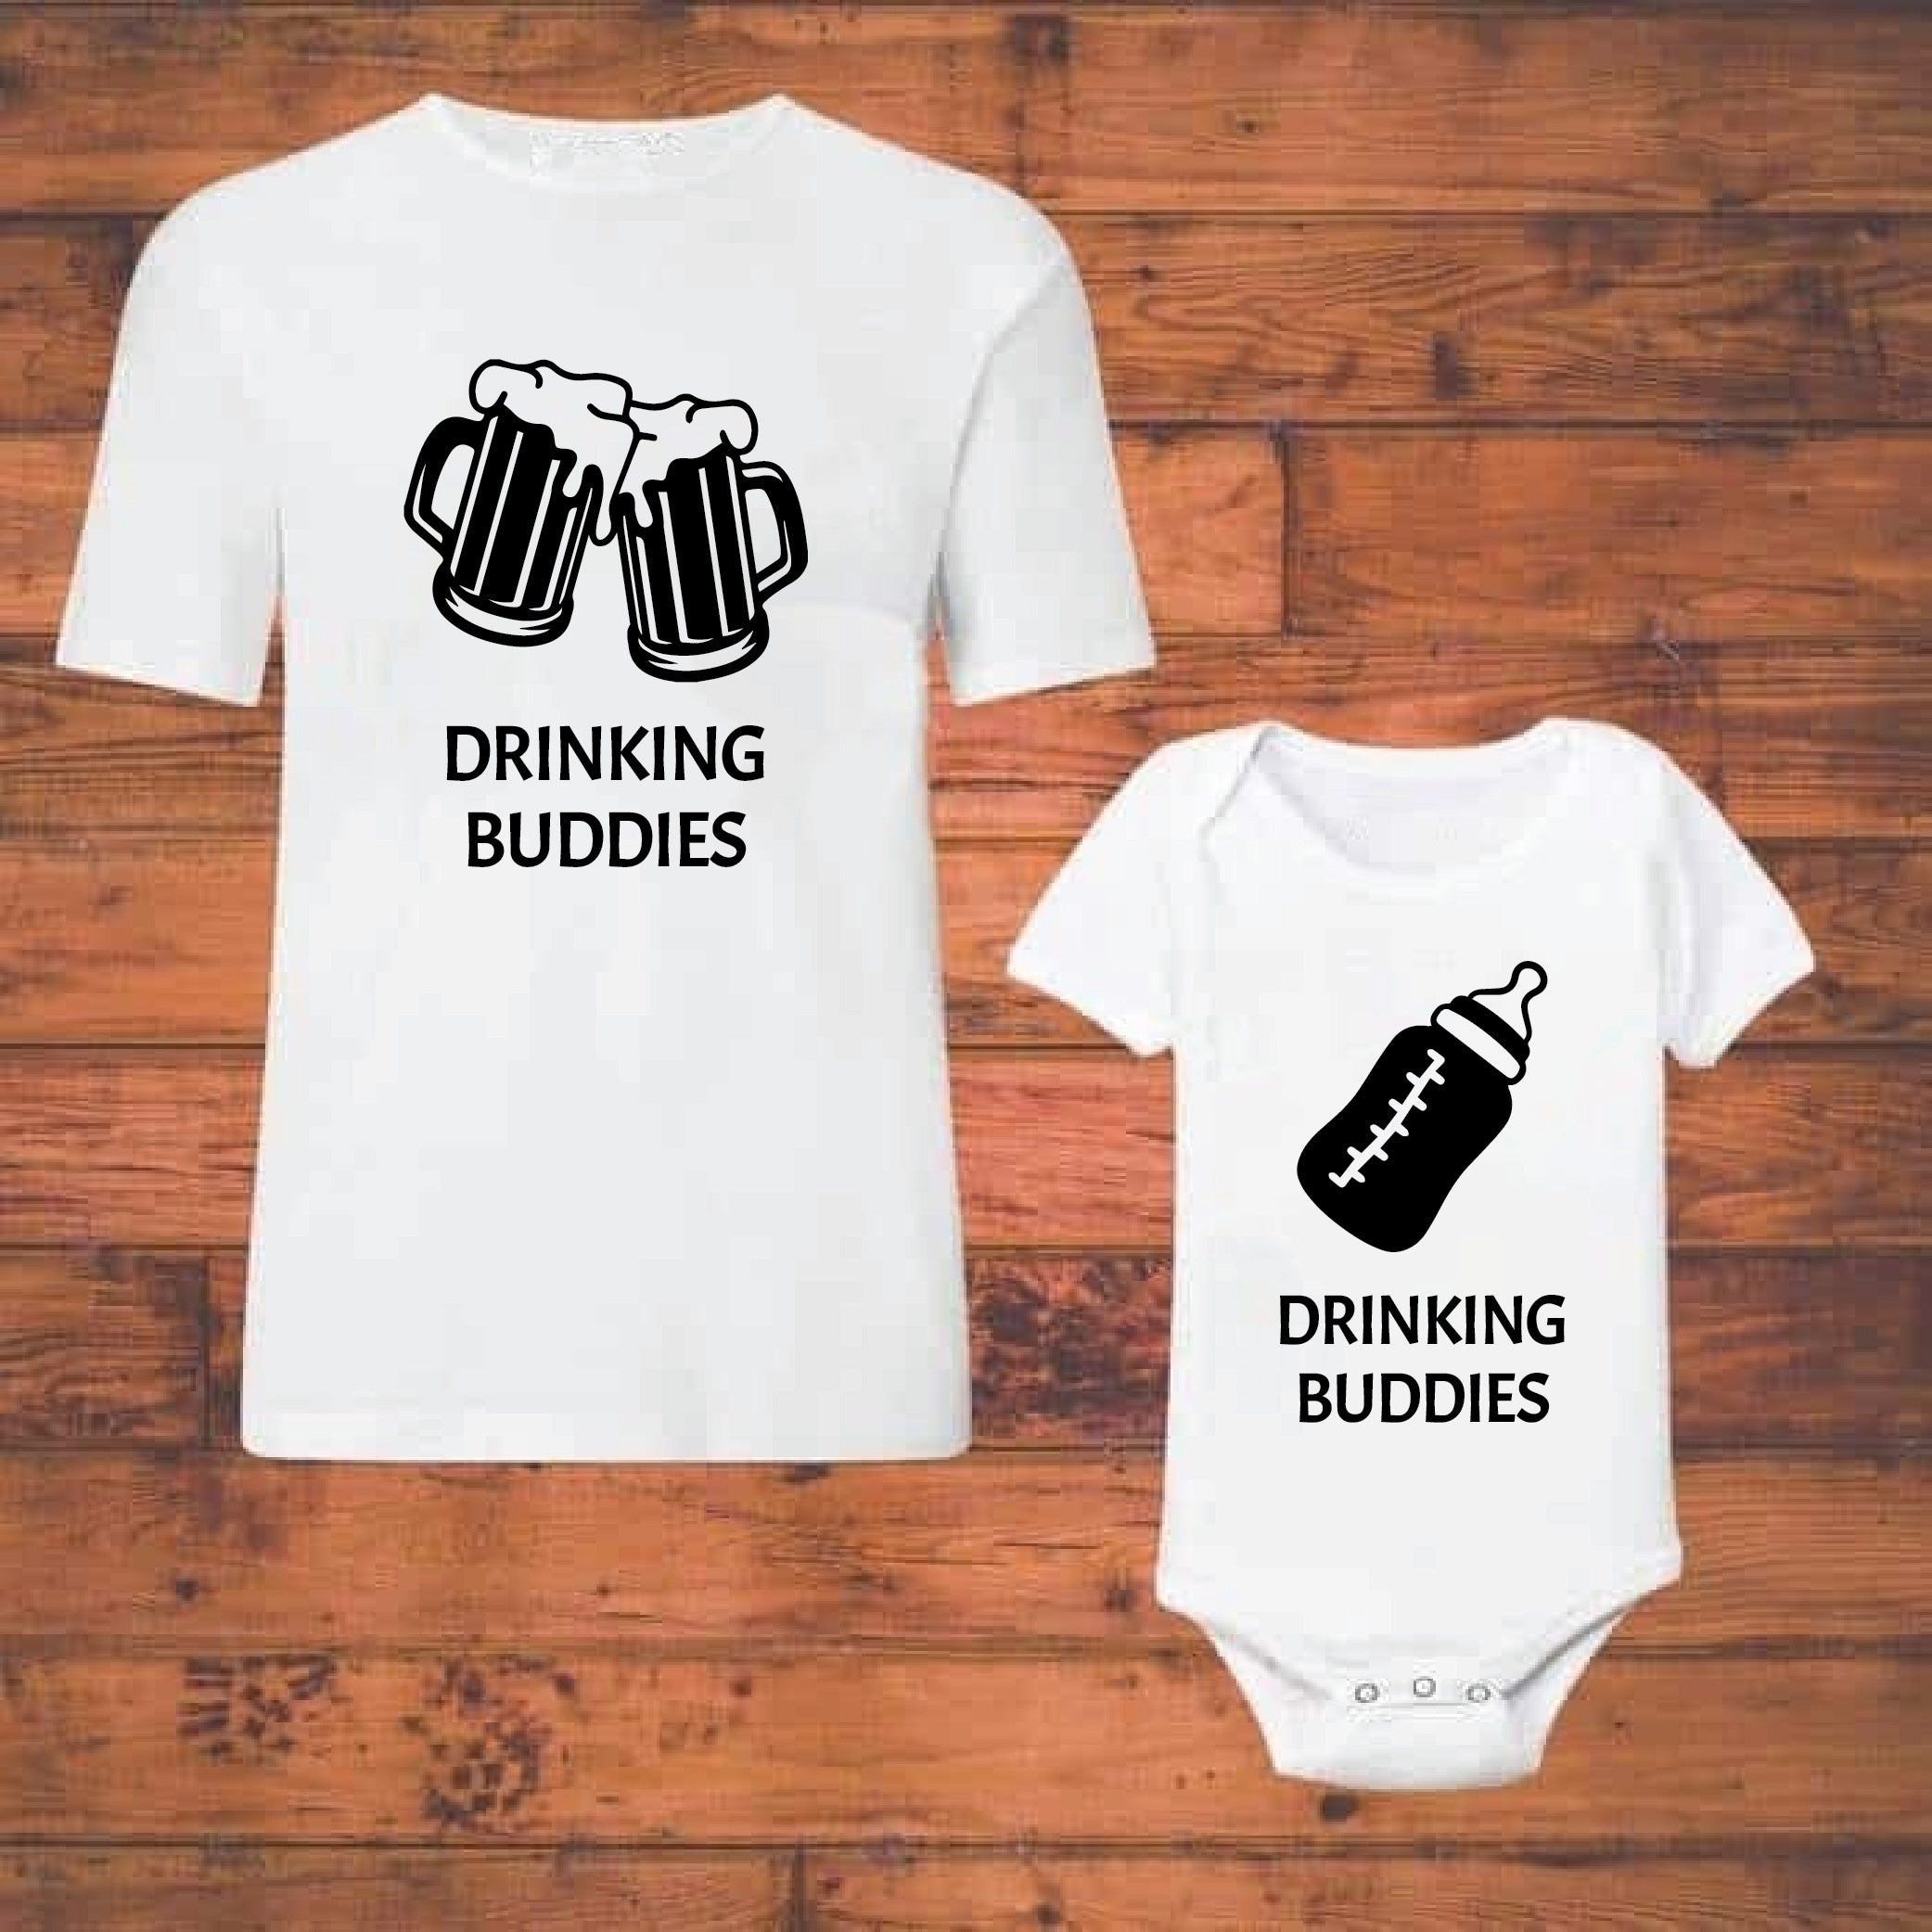 Drinking Buddies - Combo of Adult Tshirt + Kid's Tshirt/Onesie